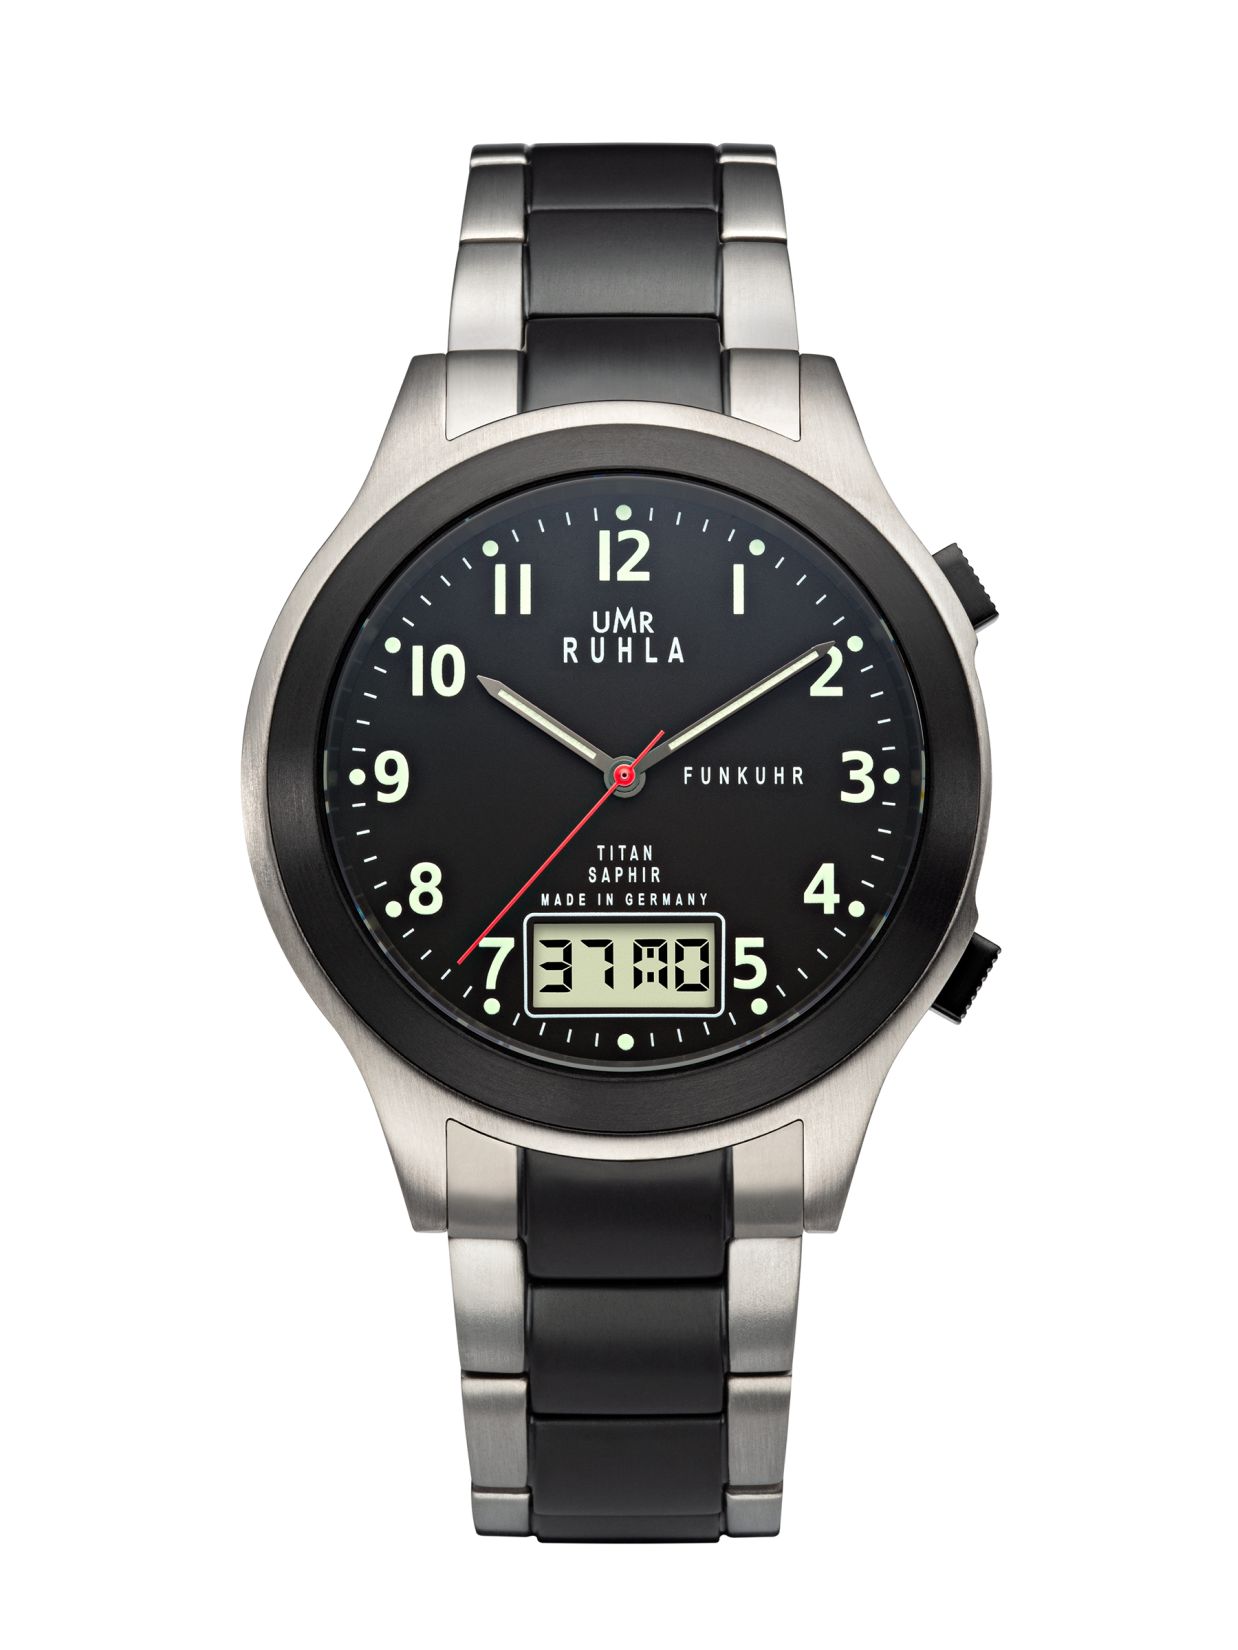 Uhren Manufaktur Ruhla - radio controlled wristwatch - black - titanium strap - made in Germany